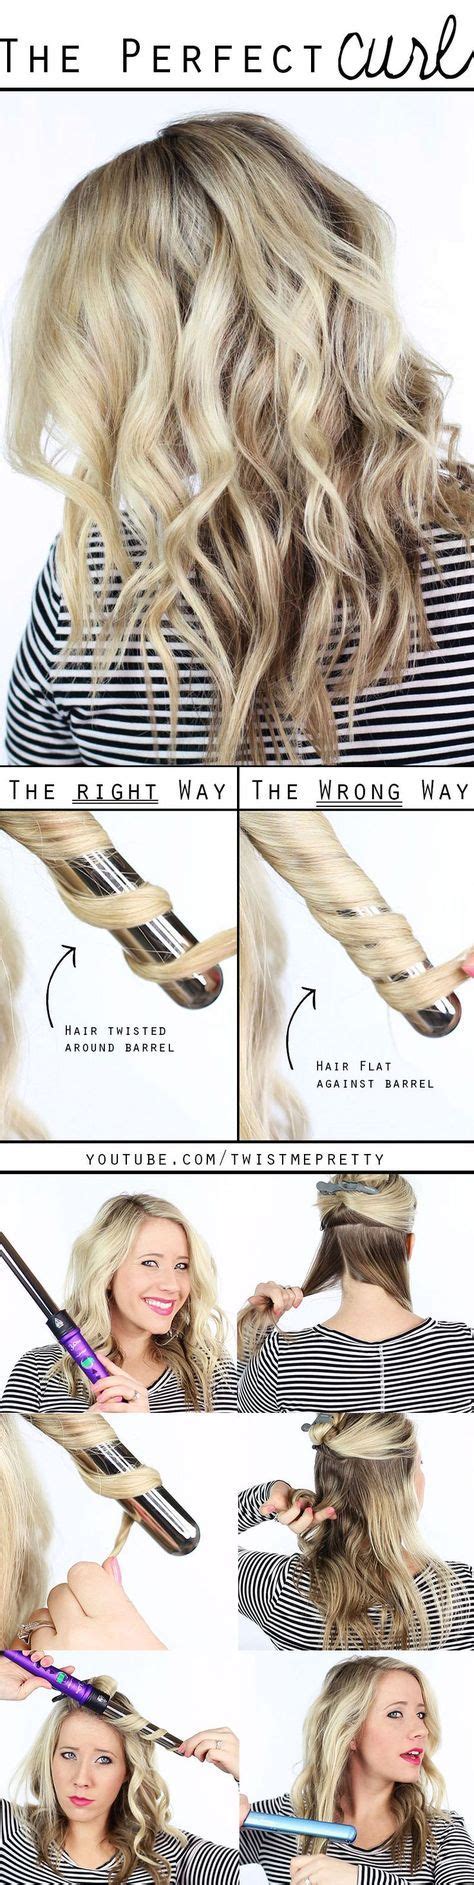 5 Hair Curling Wand Tutorials Curling Hair With Wand Hair Beauty